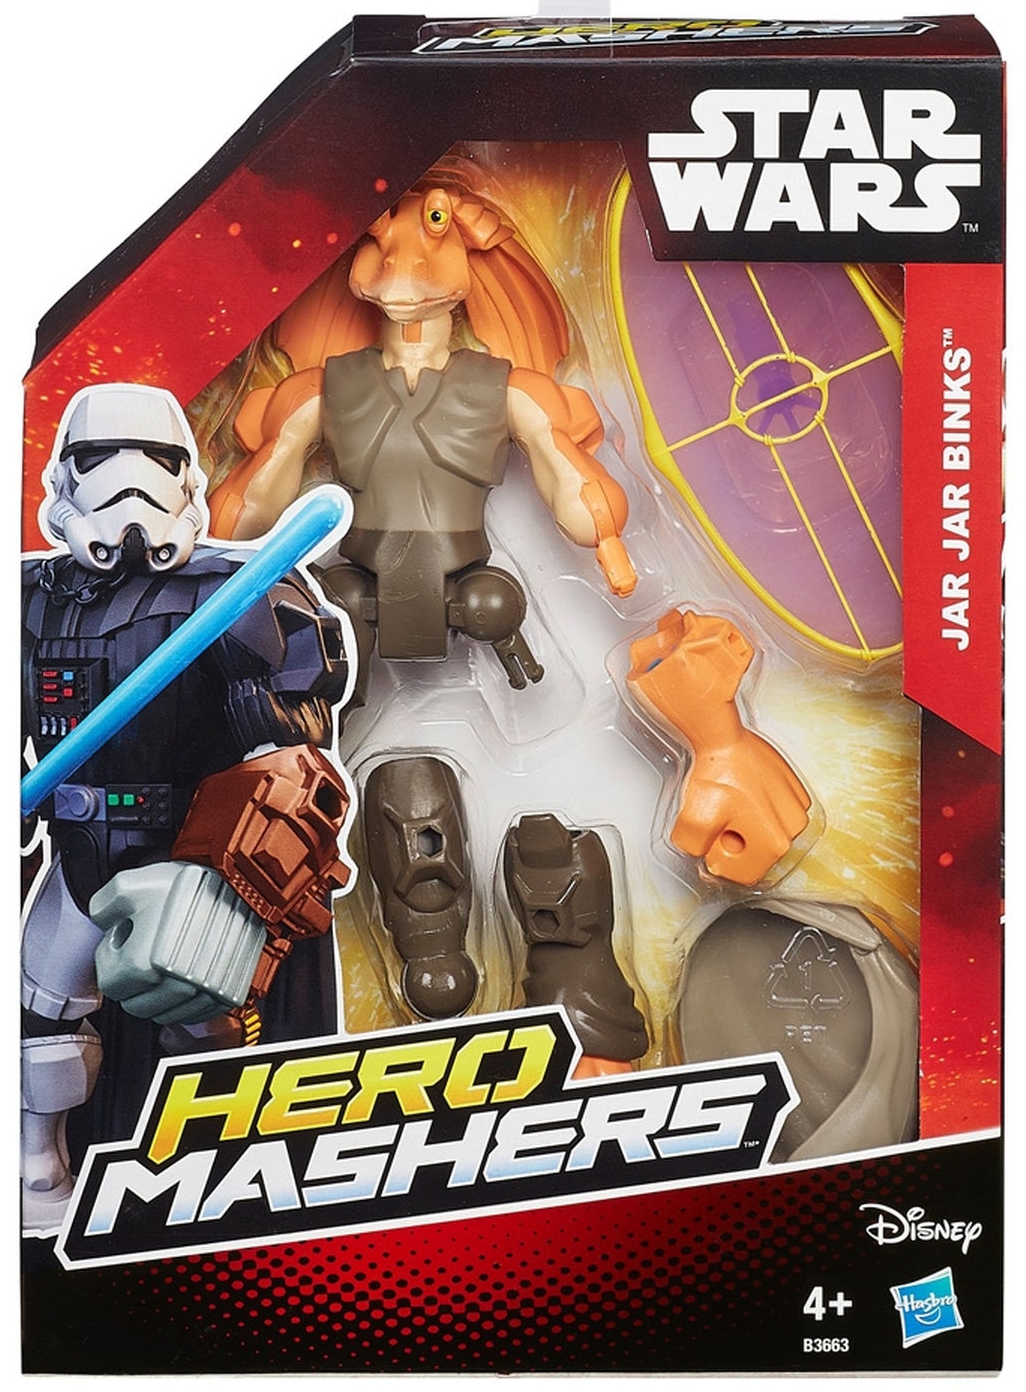 Disney Star Wars 'Jar Jar Binks' Hero Mashers 6 inch Figure Toy